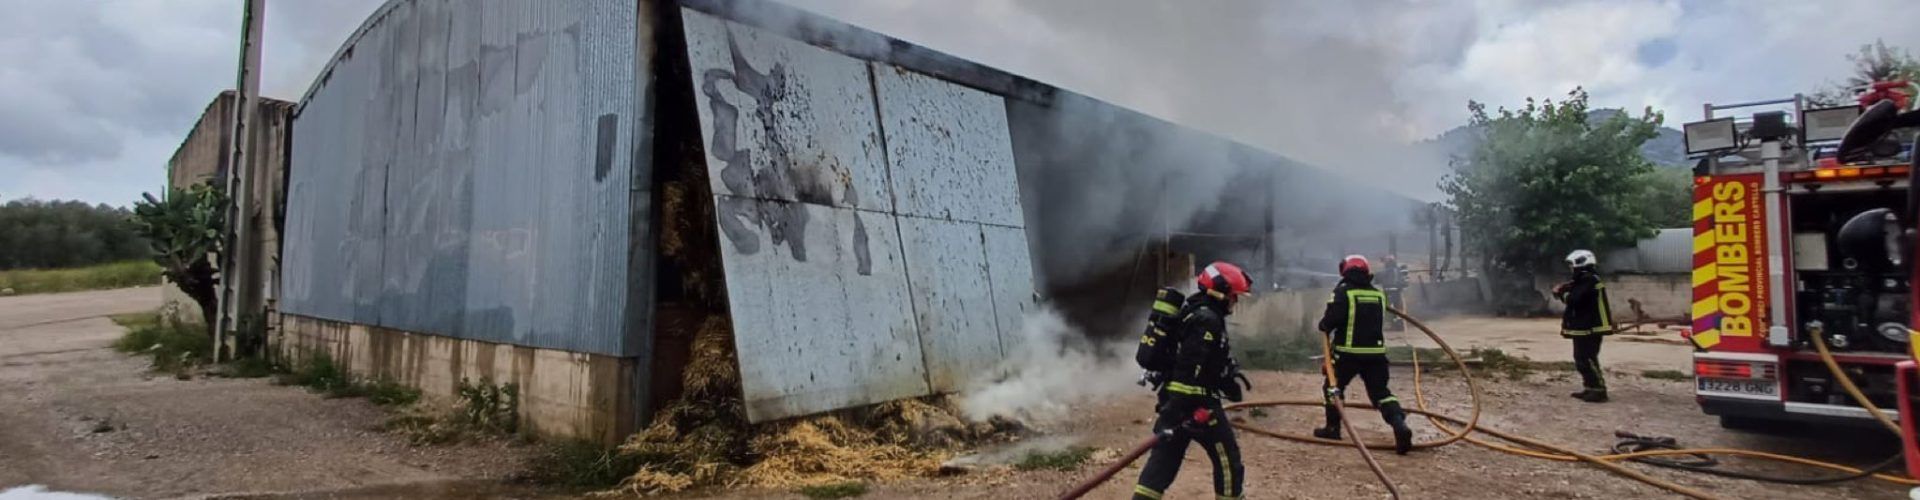 Incendio en una granja de Salzadella